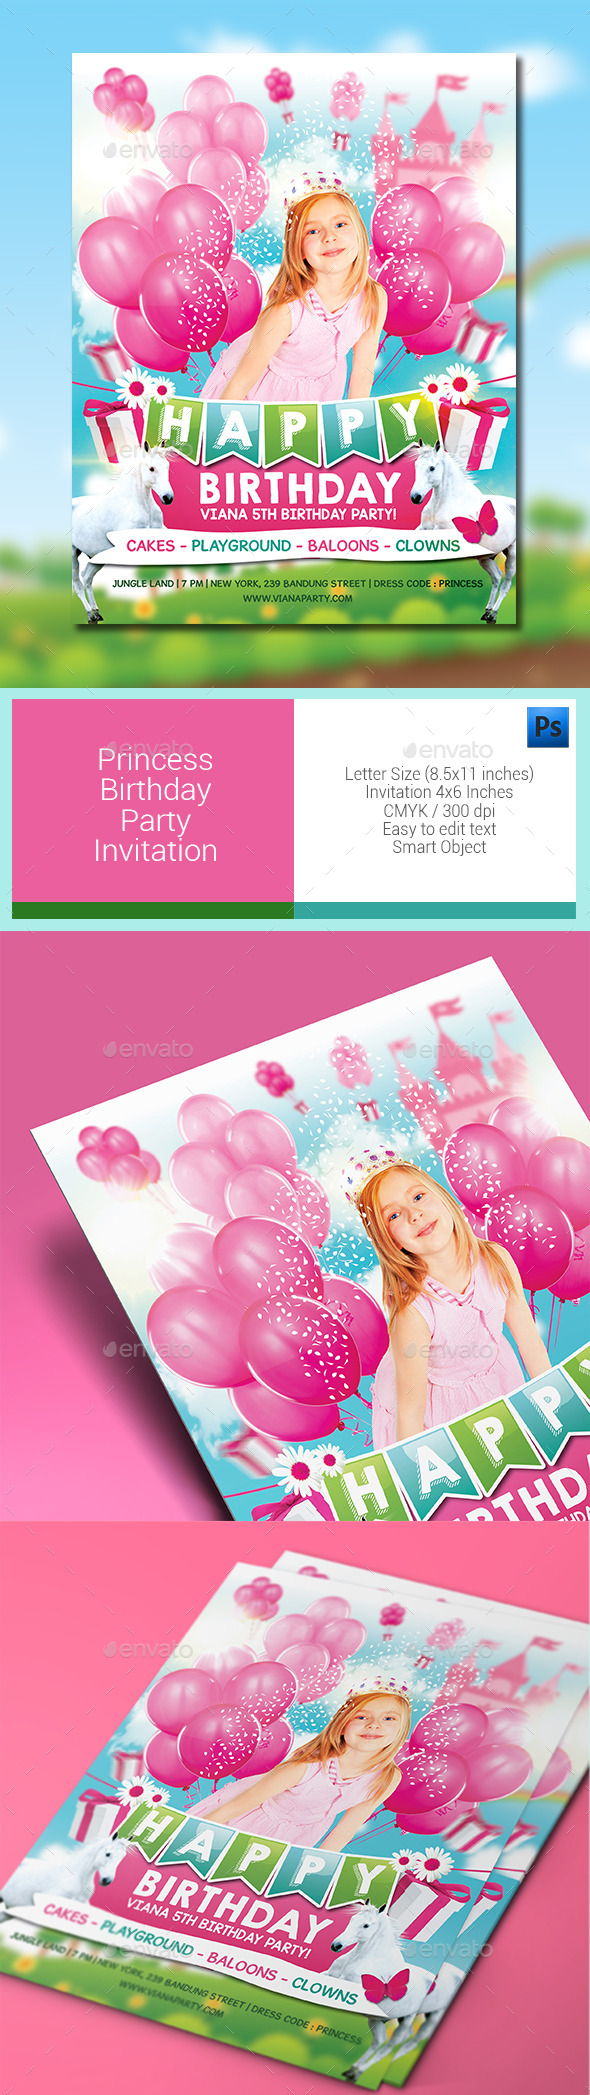 Princess Birthday Party Invitation